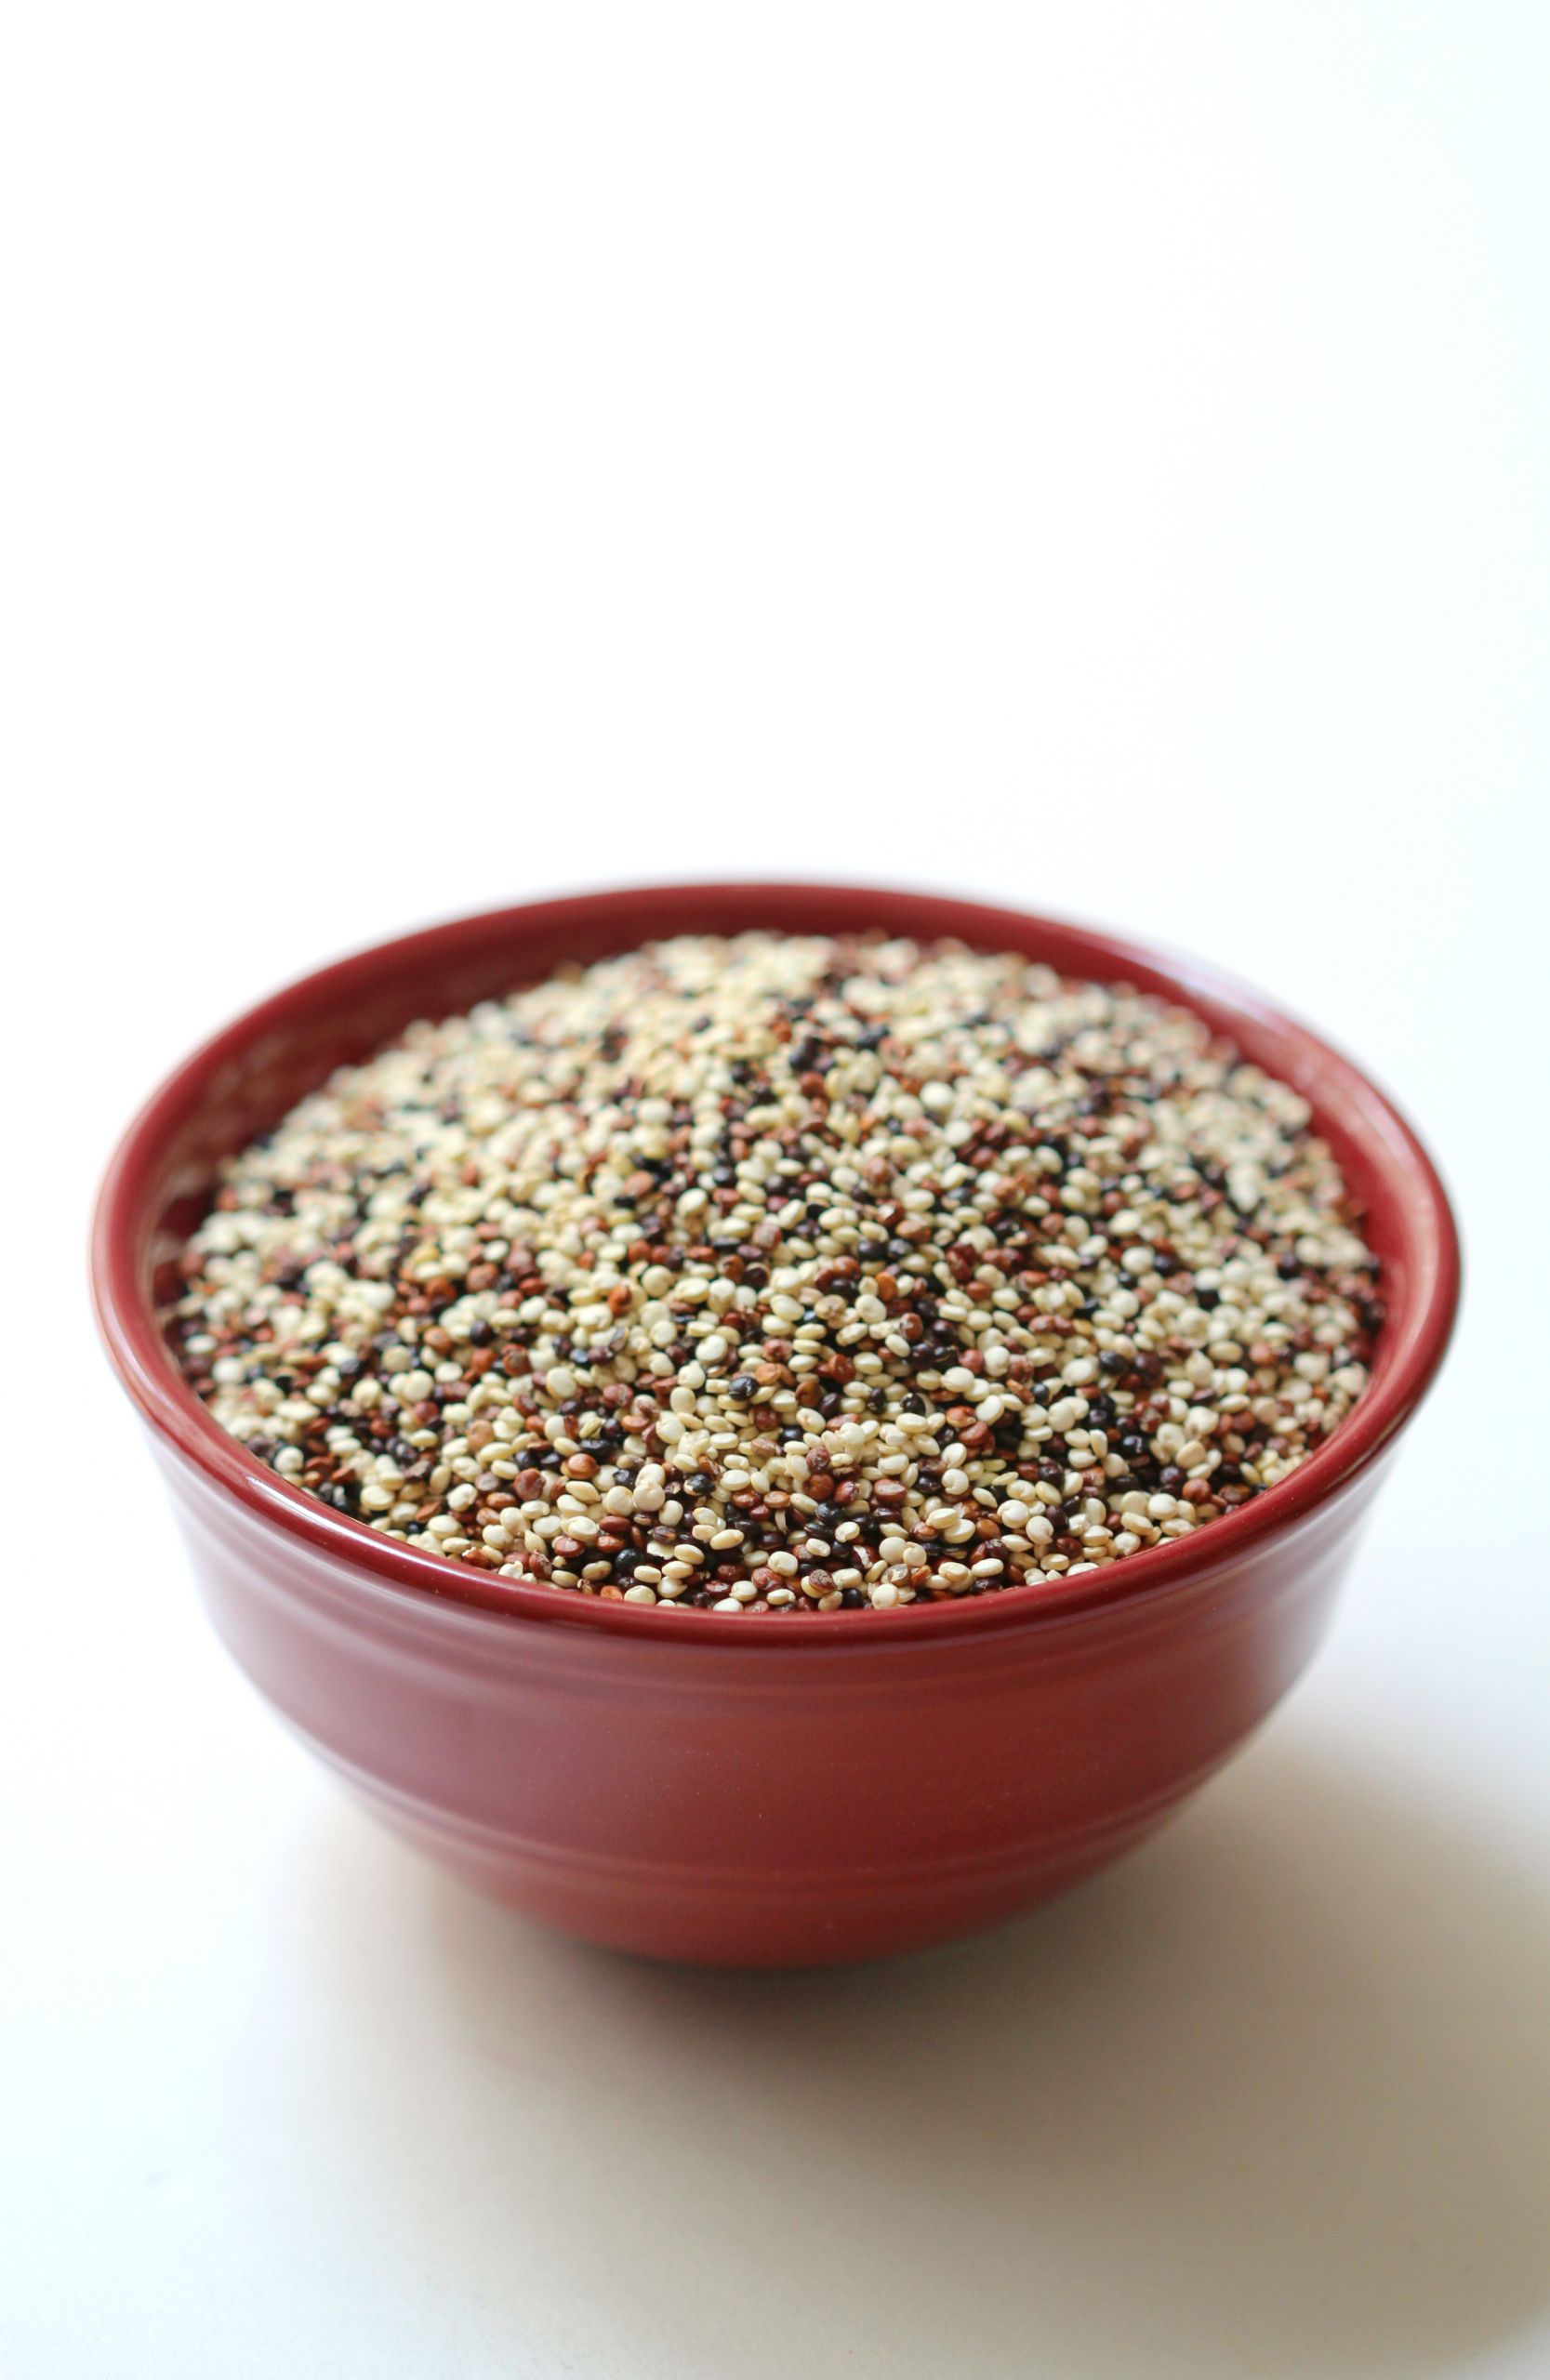 Quinoa Is Gluten Free
 Quinoa The Most Versatile Gluten Free Seed